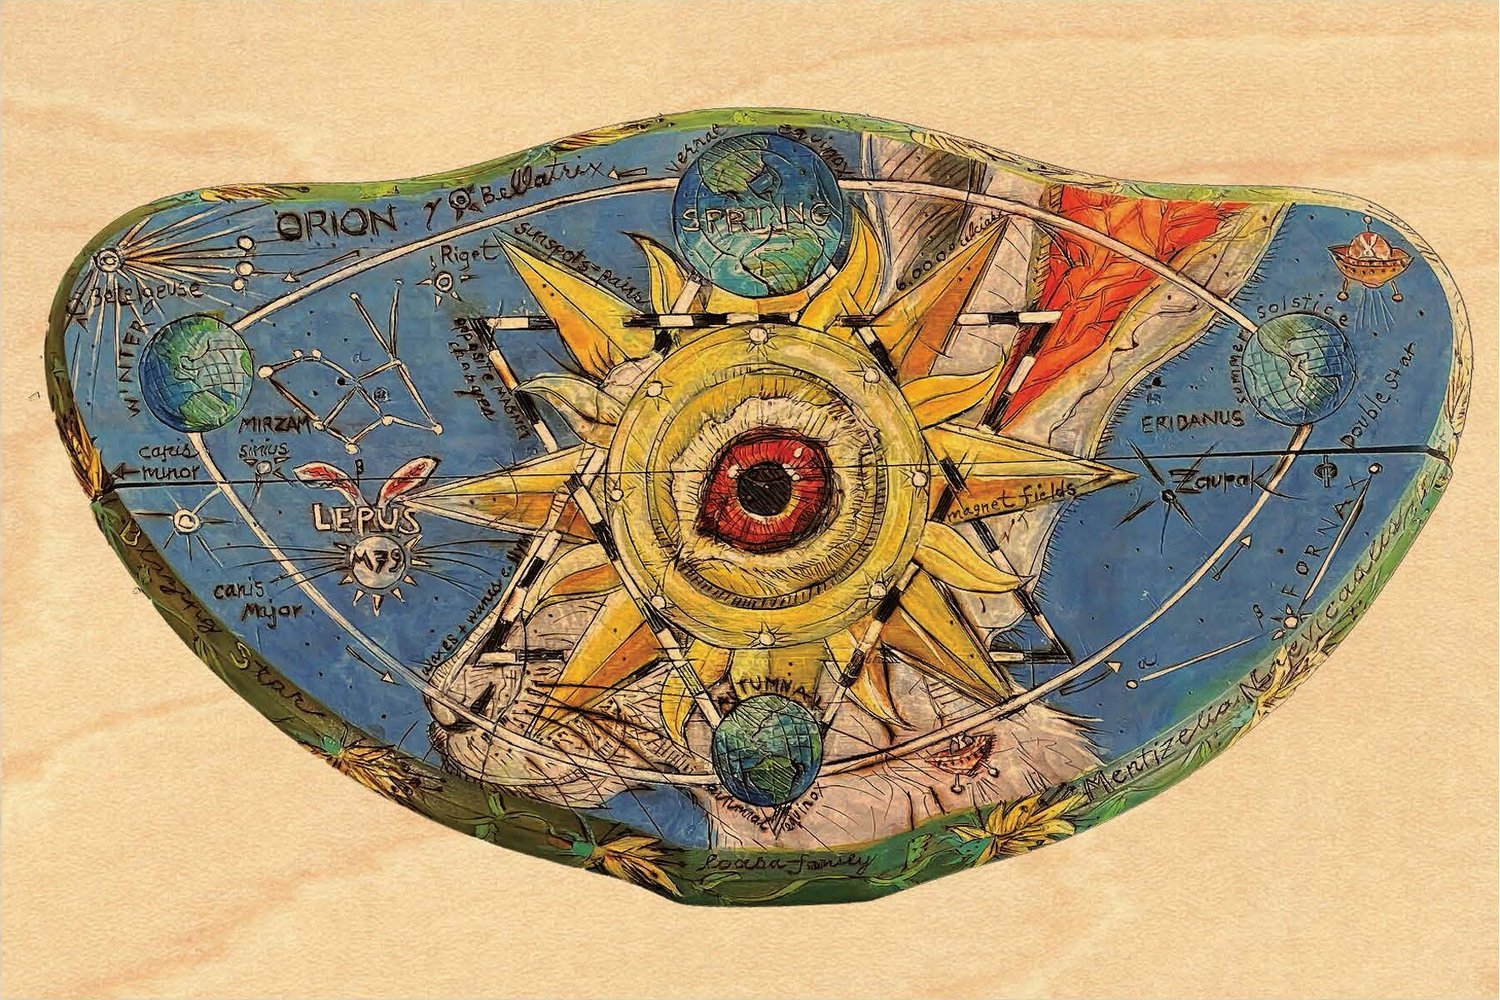 Bunny Sun Eye.. Full-Color 4 x 6” Postcard Printed on Maple Wood